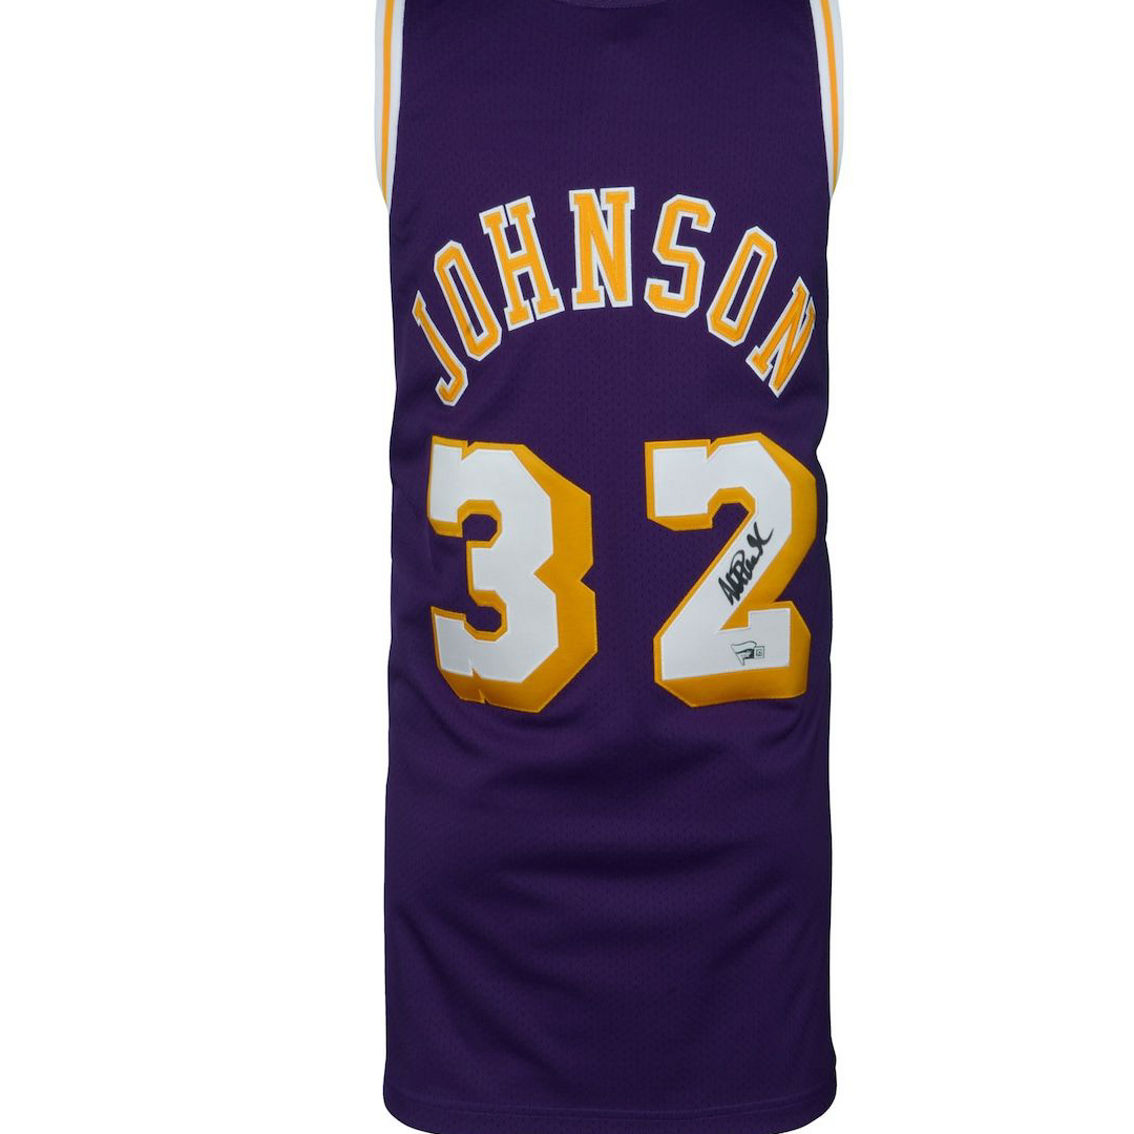 Fanatics Authentic Magic Johnson Los Angeles Lakers Autographed Purple Authentic Jersey - Image 3 of 4